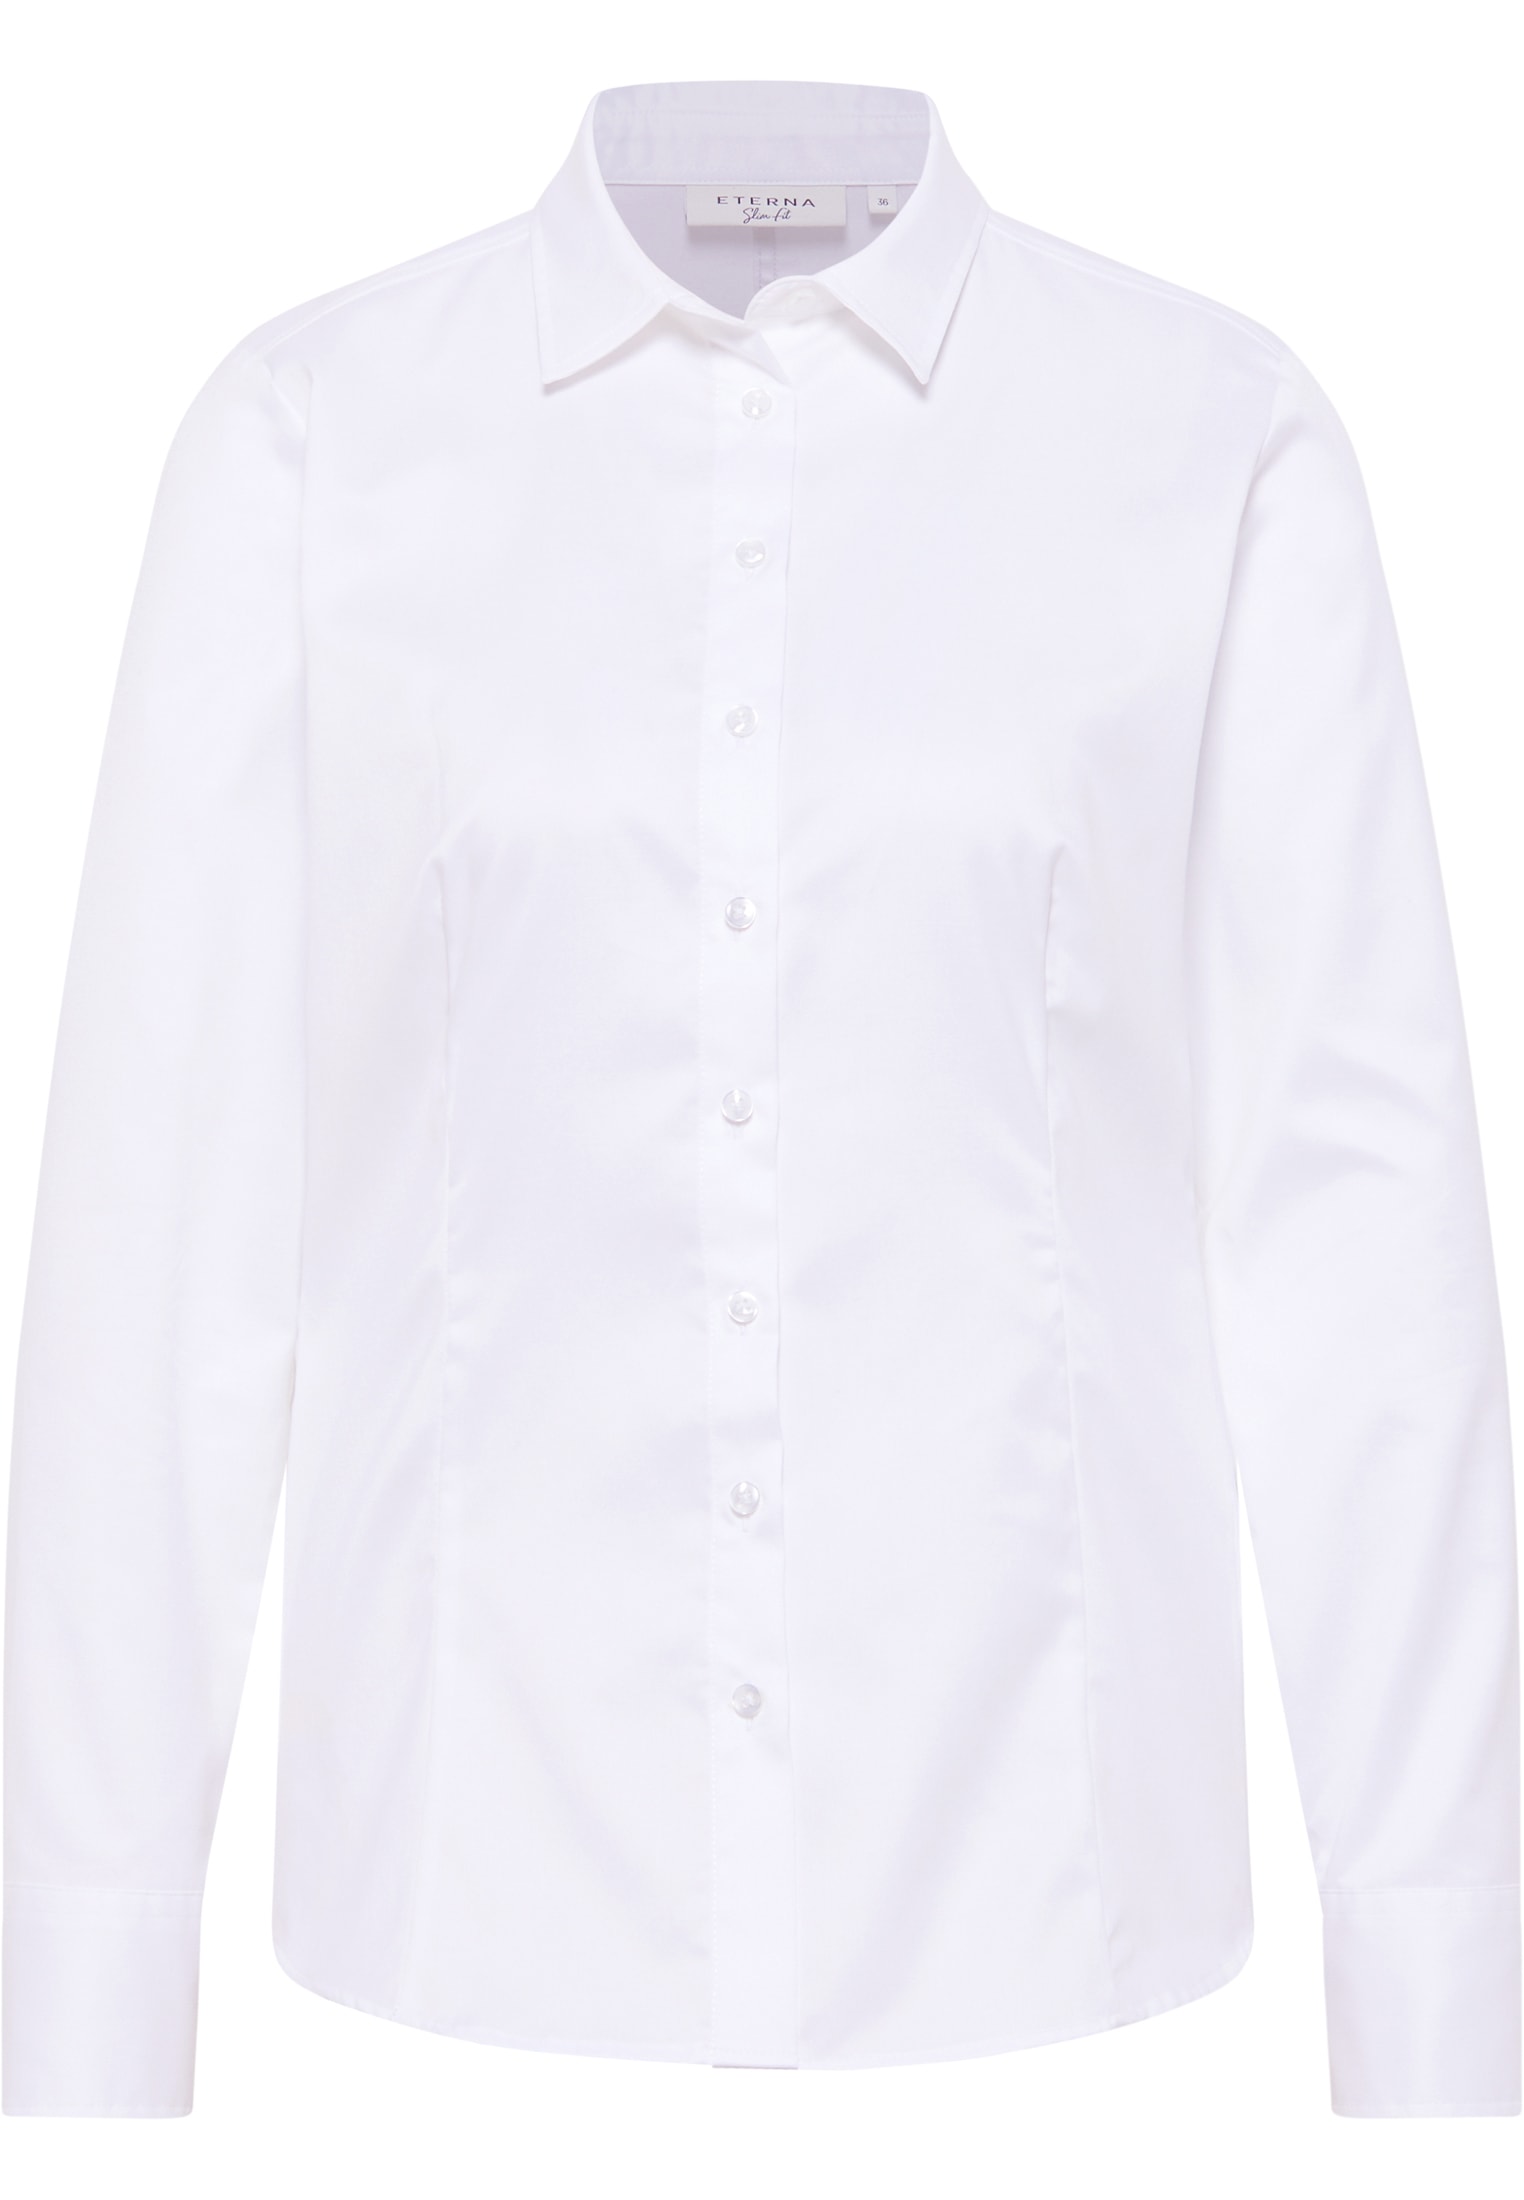 in Shirt | 2BL00073-00-01-34-1/1 | | Cover 34 weiß unifarben Langarm | Bluse weiß